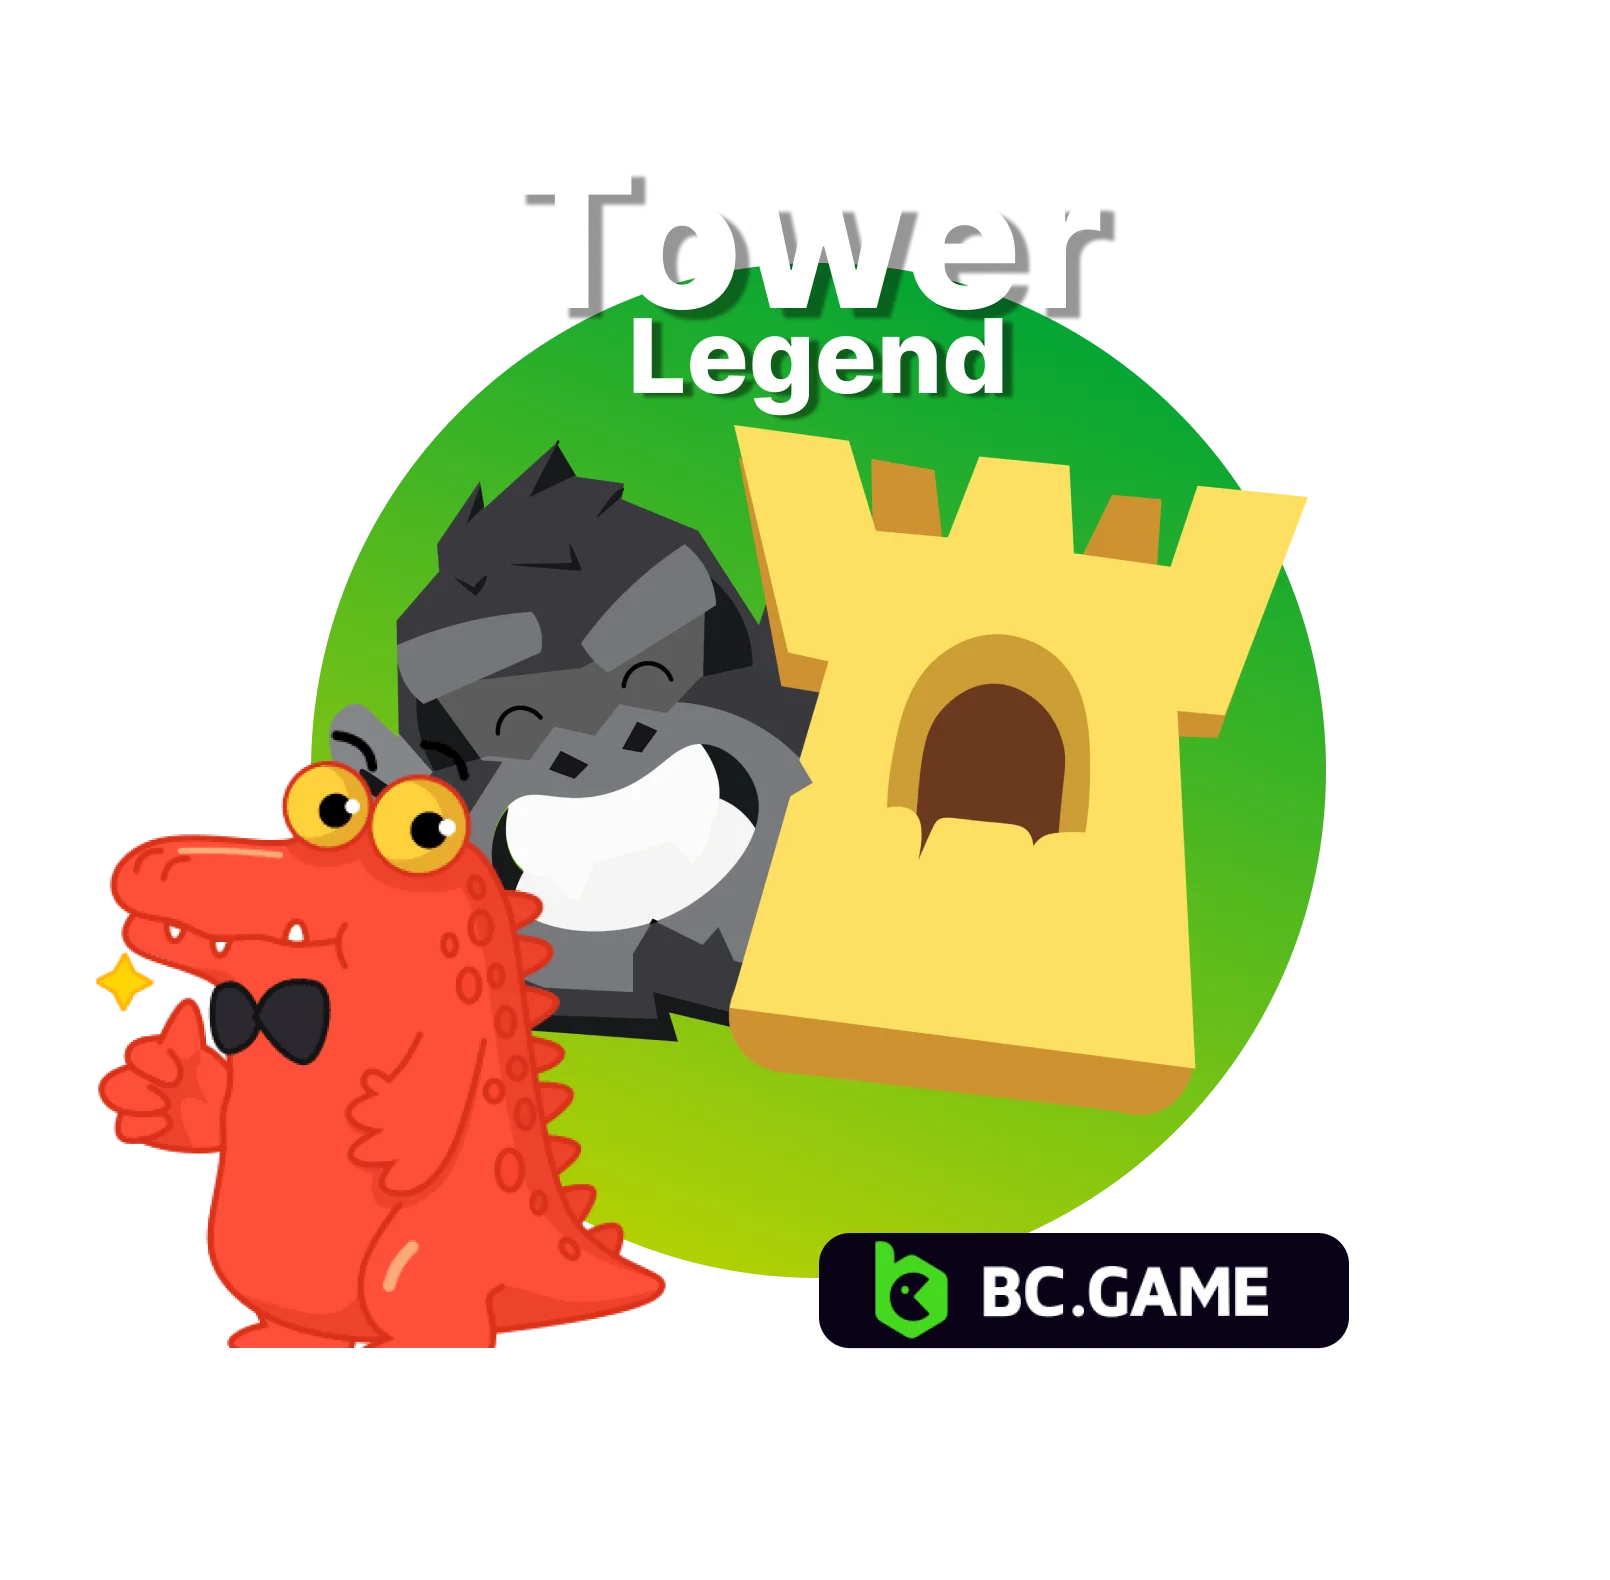 A unique BC Original game: Tower Legend